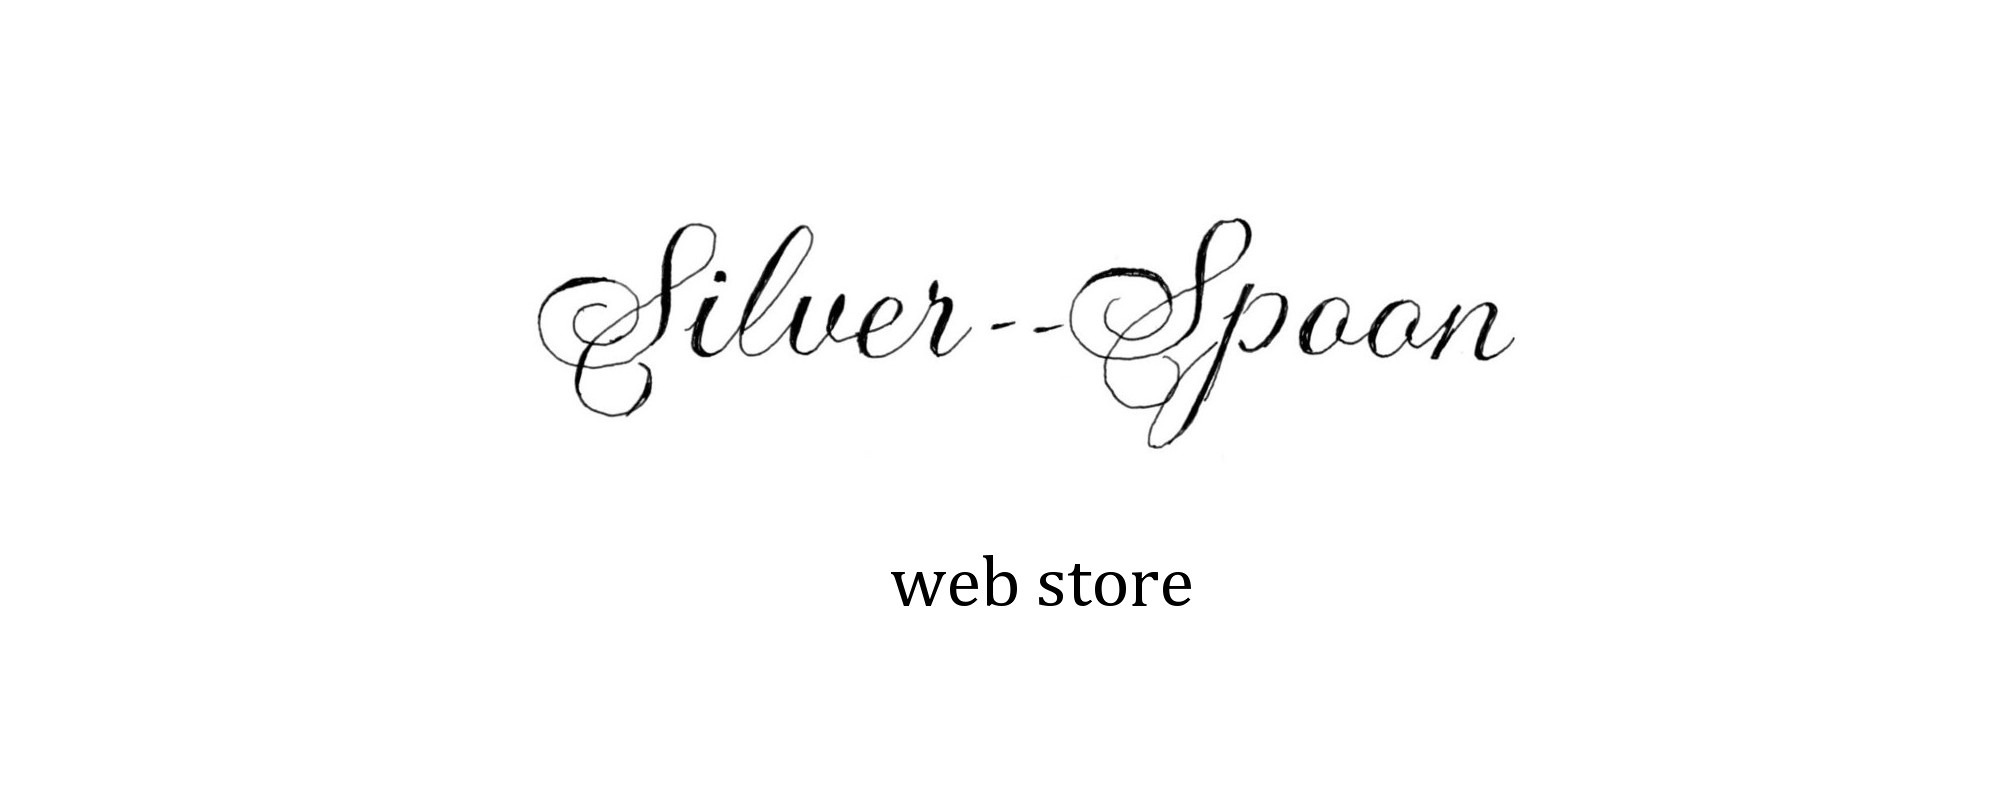 silver--spoon 